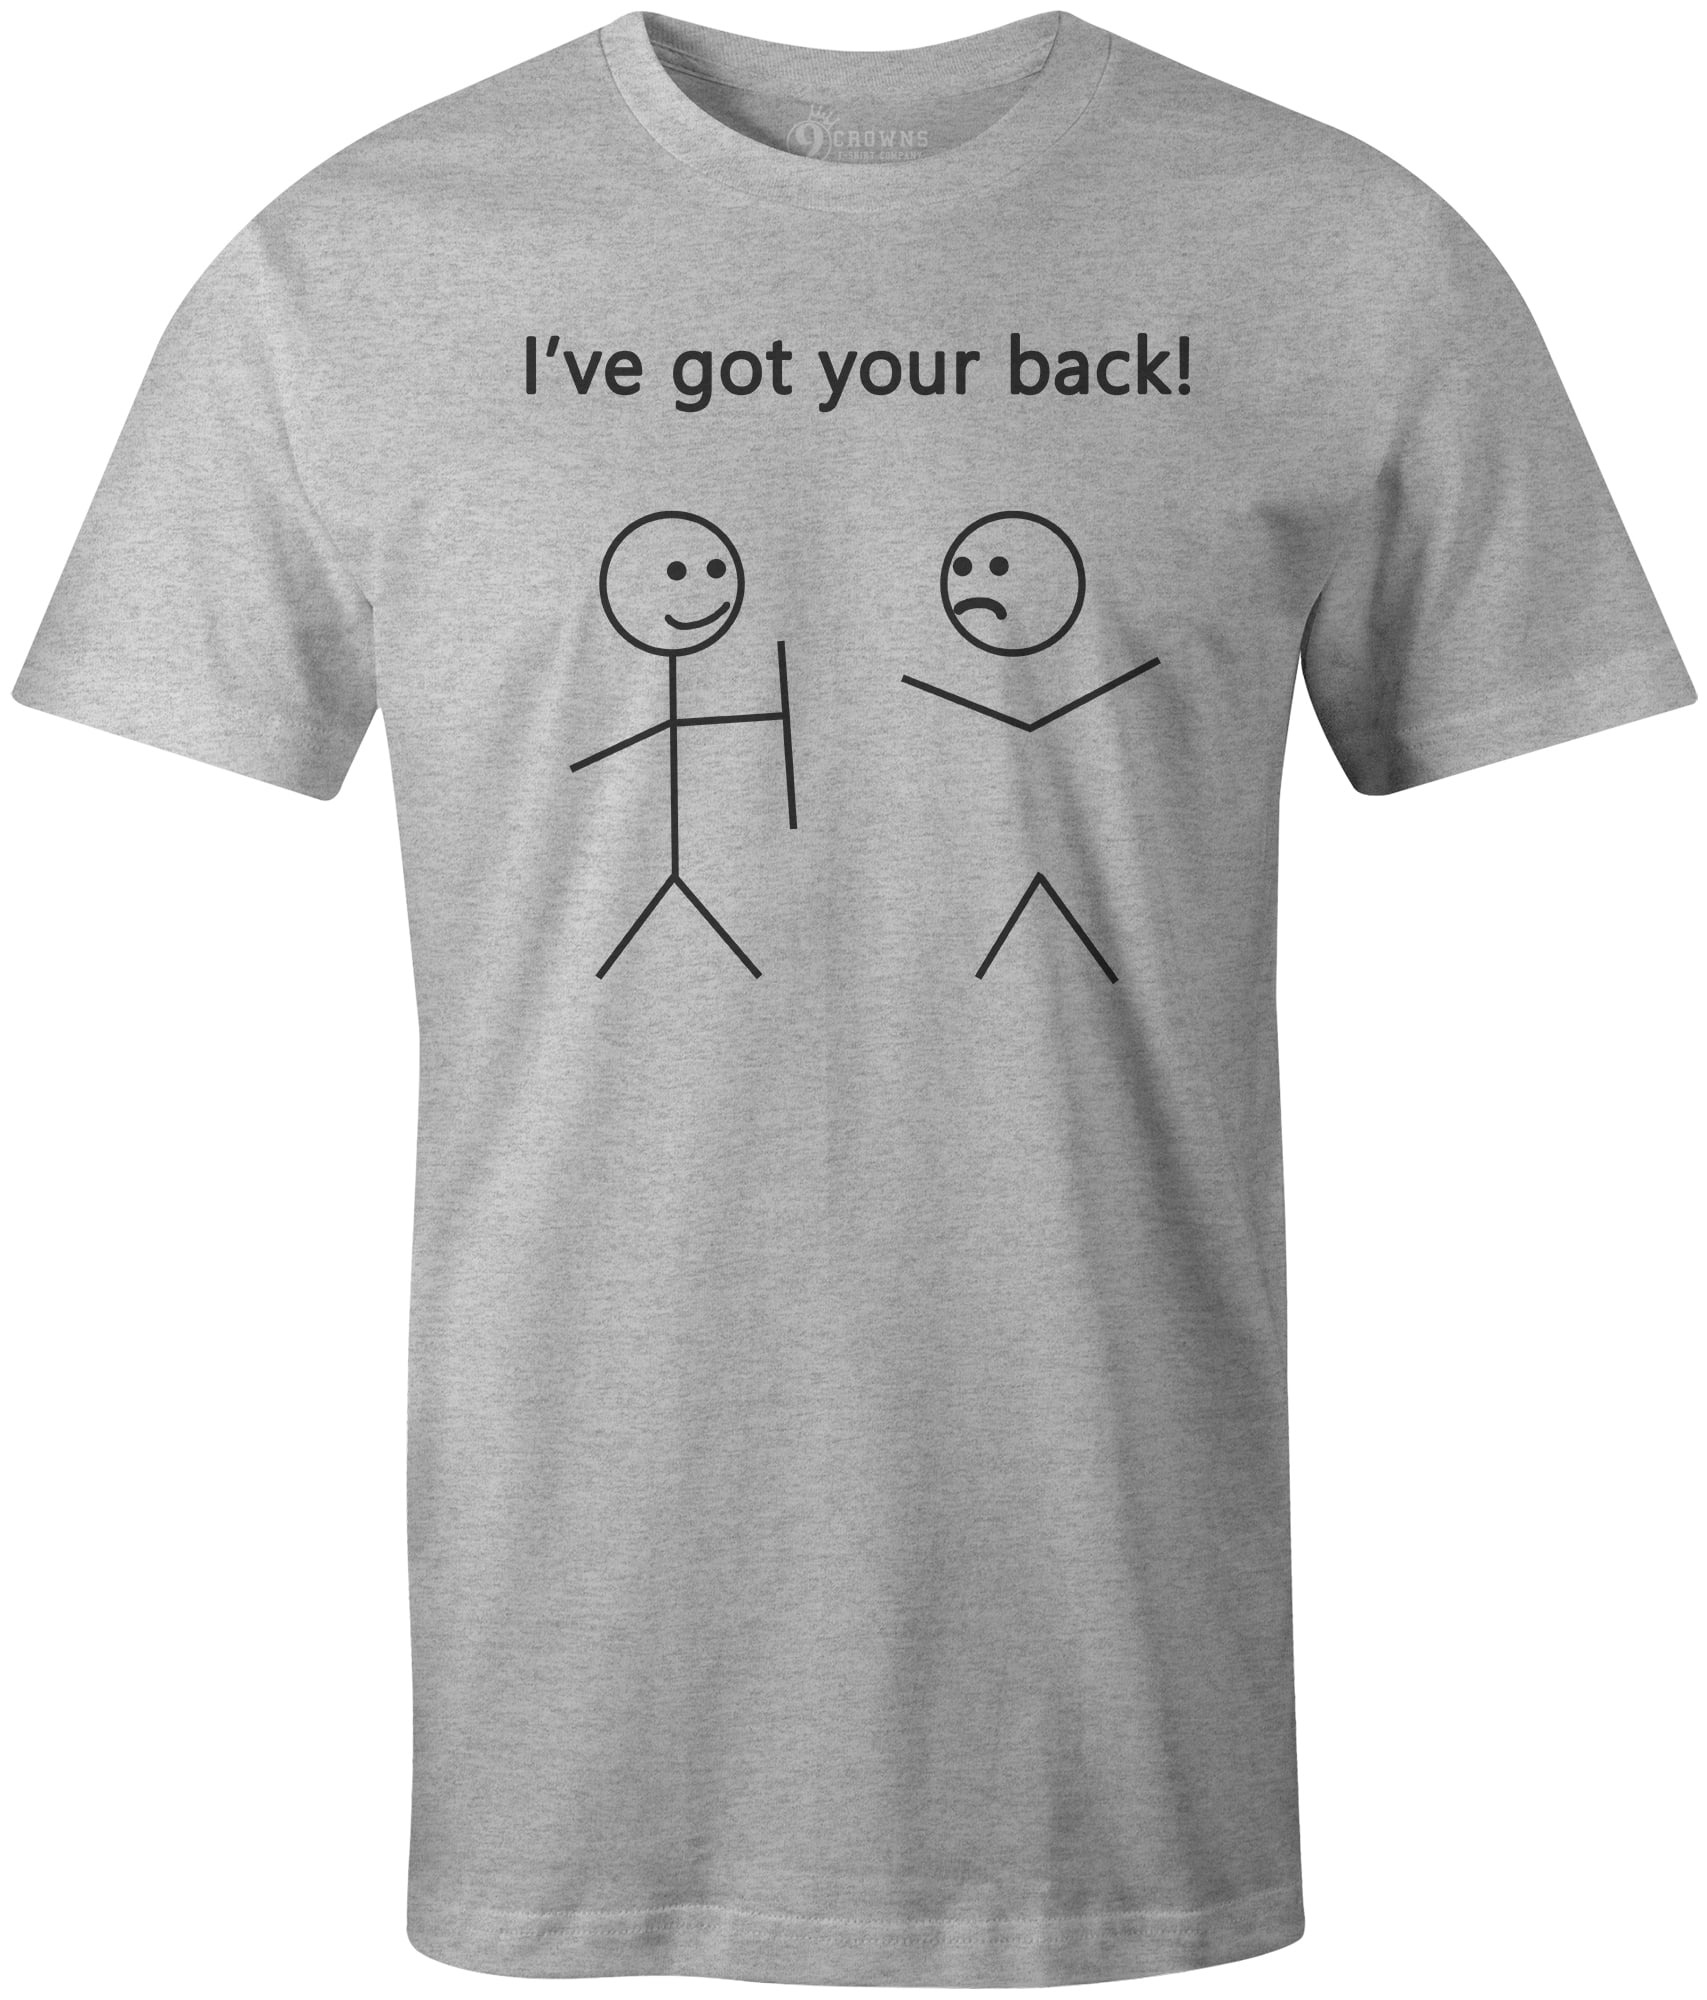 Get cheap goods online Funny T-Shirt Stick Figures I Got Your Back ...